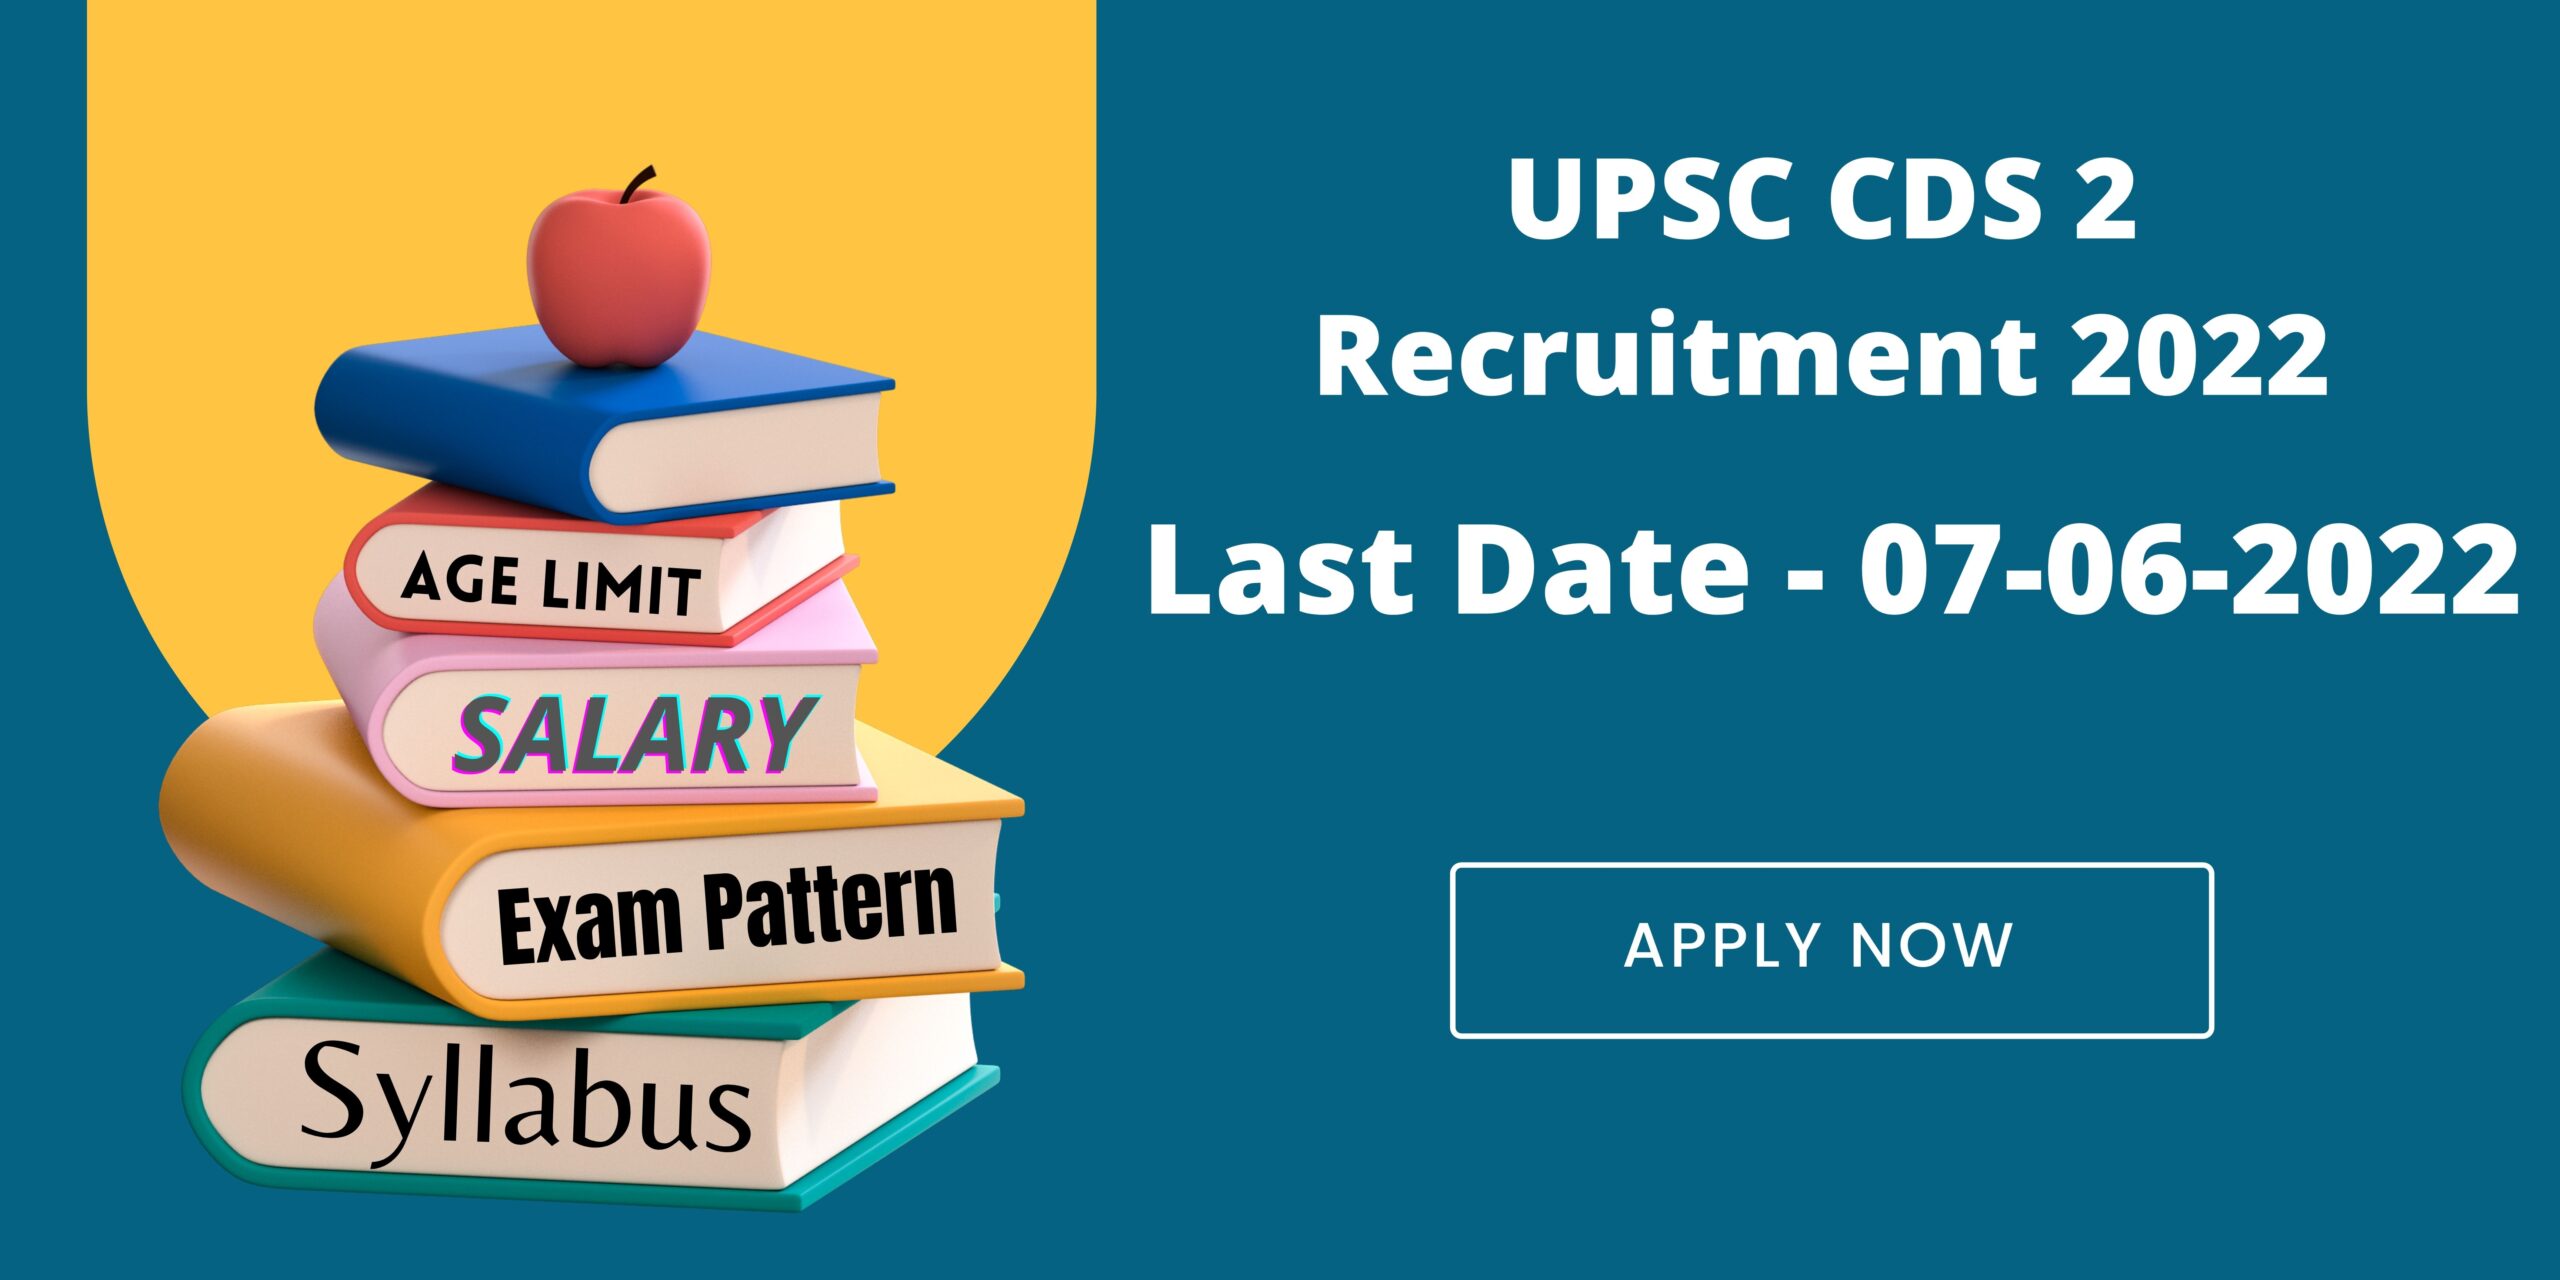 UPSC CDS 2 Recruitment 2022